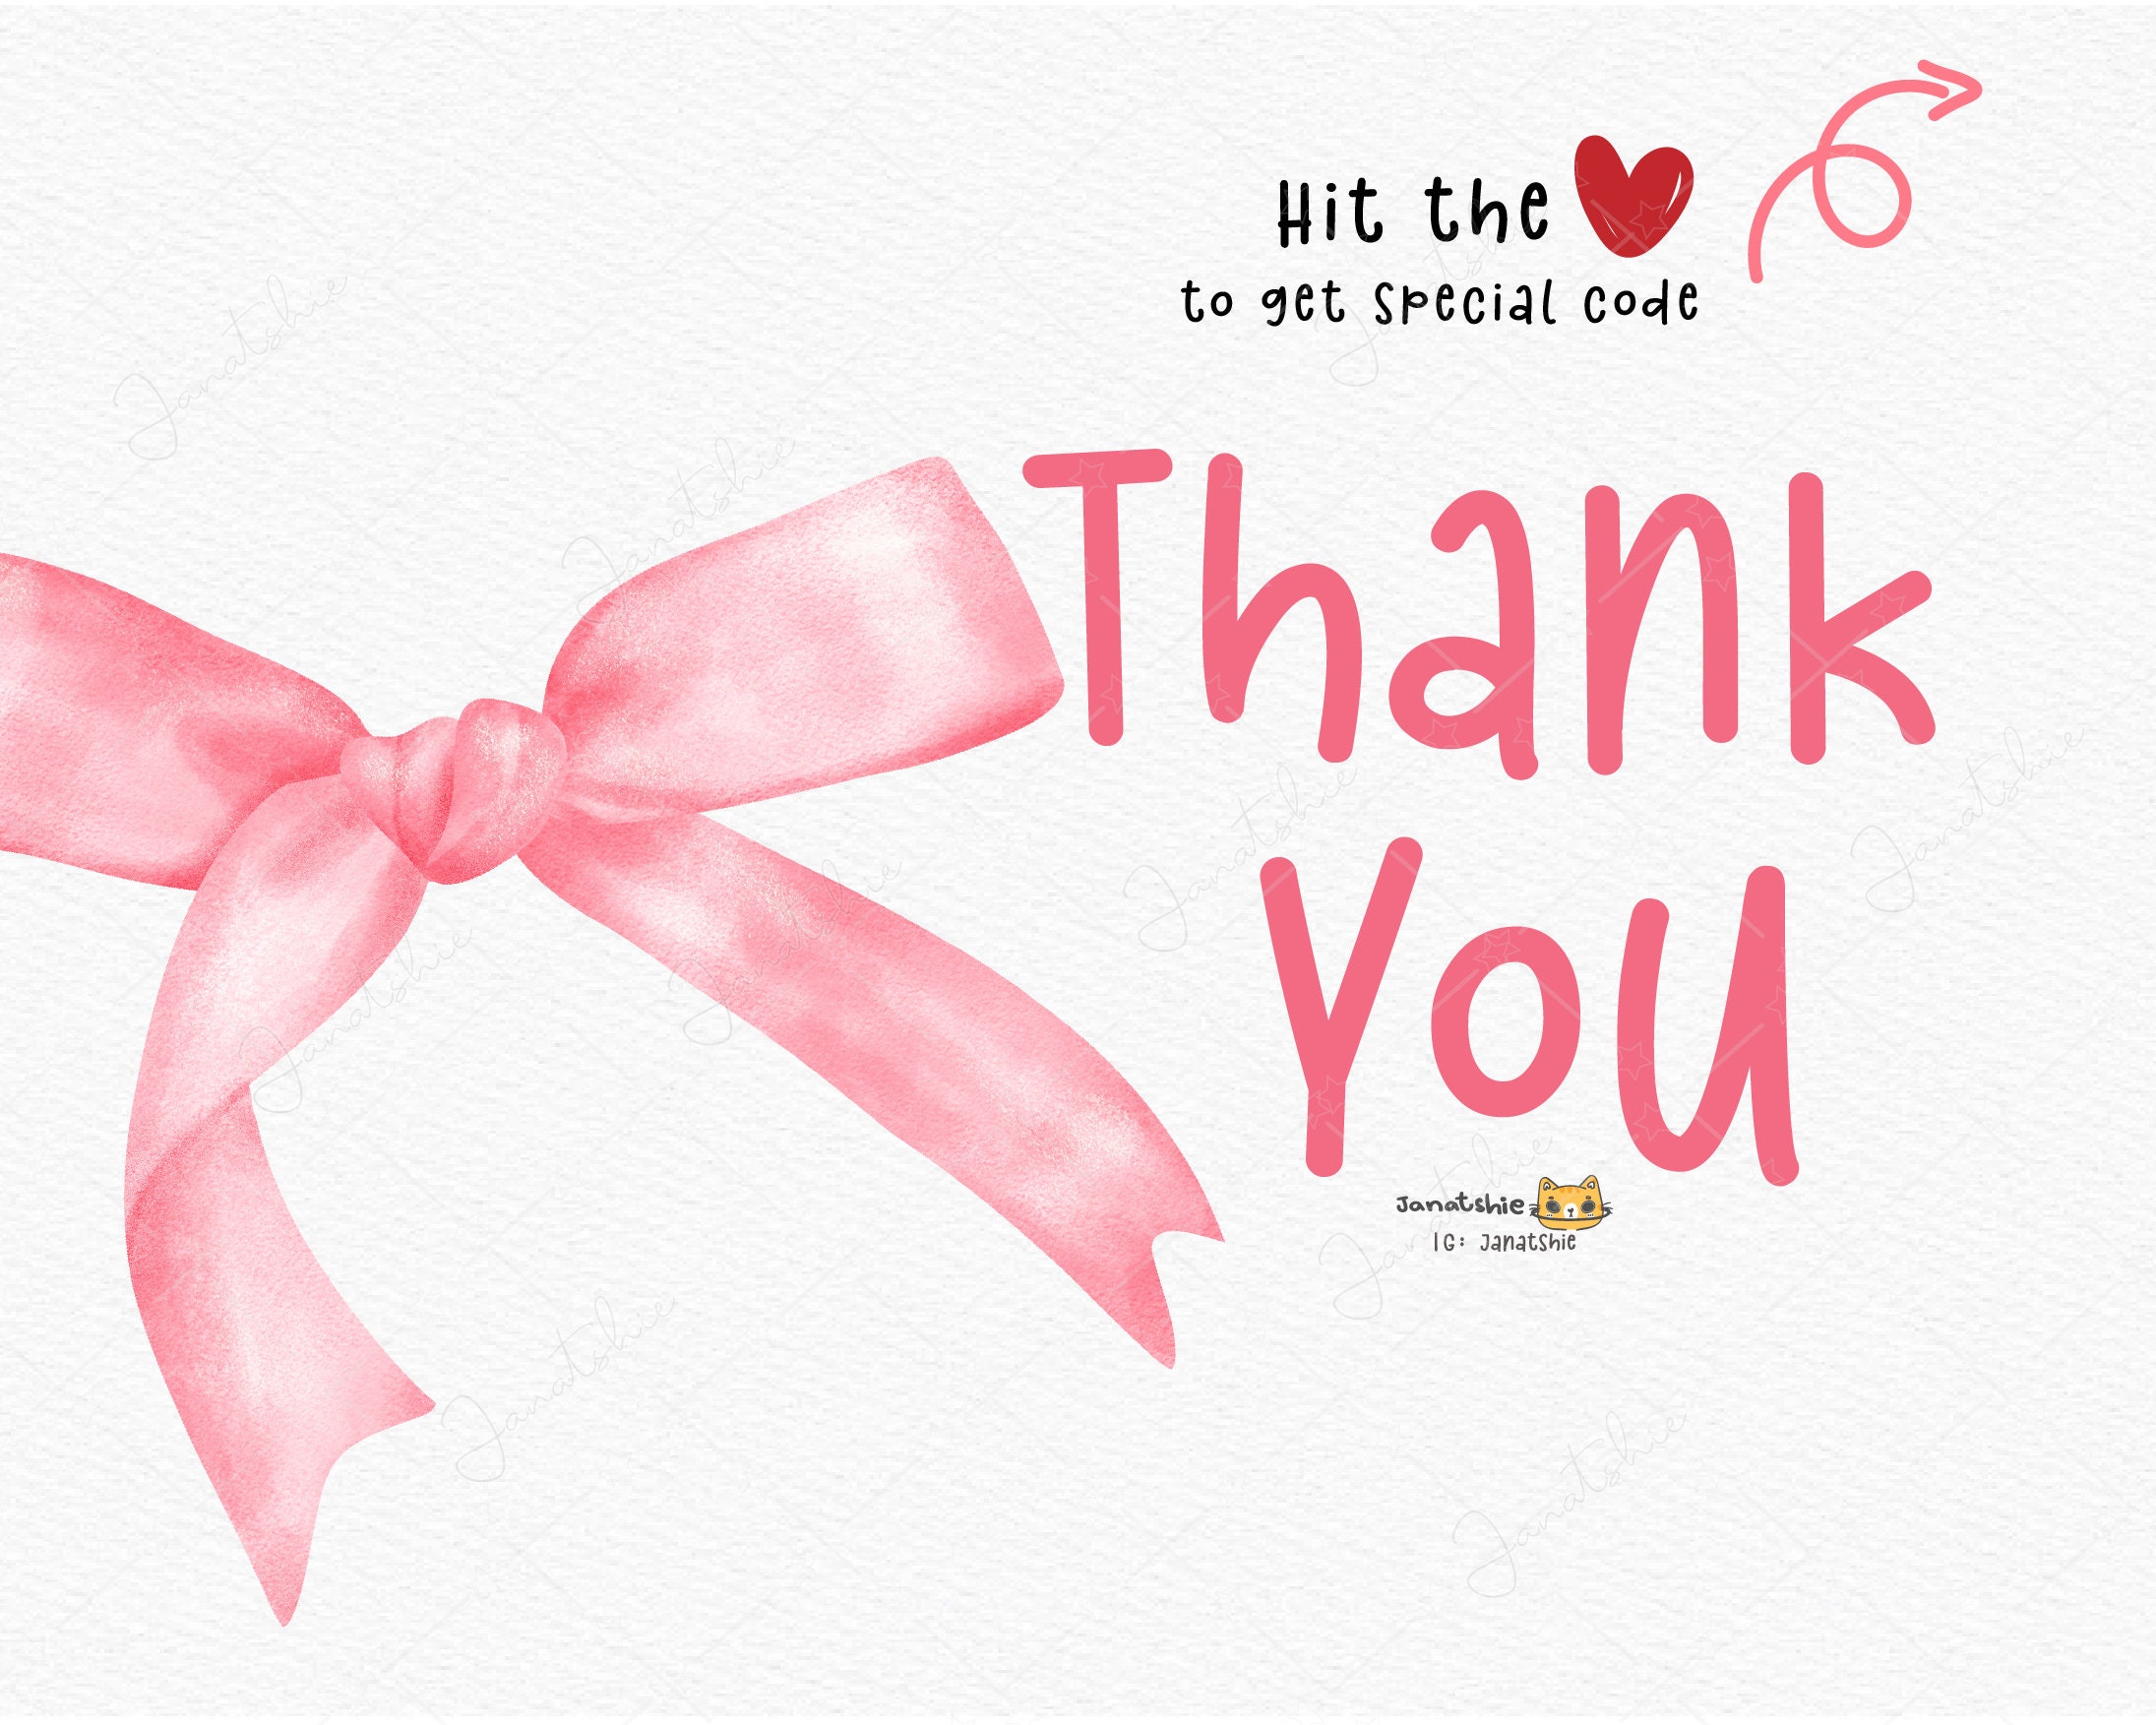 Pink Coquette ribbon bow watercolor hand drawn - Stock Illustration  [110068345] - PIXTA